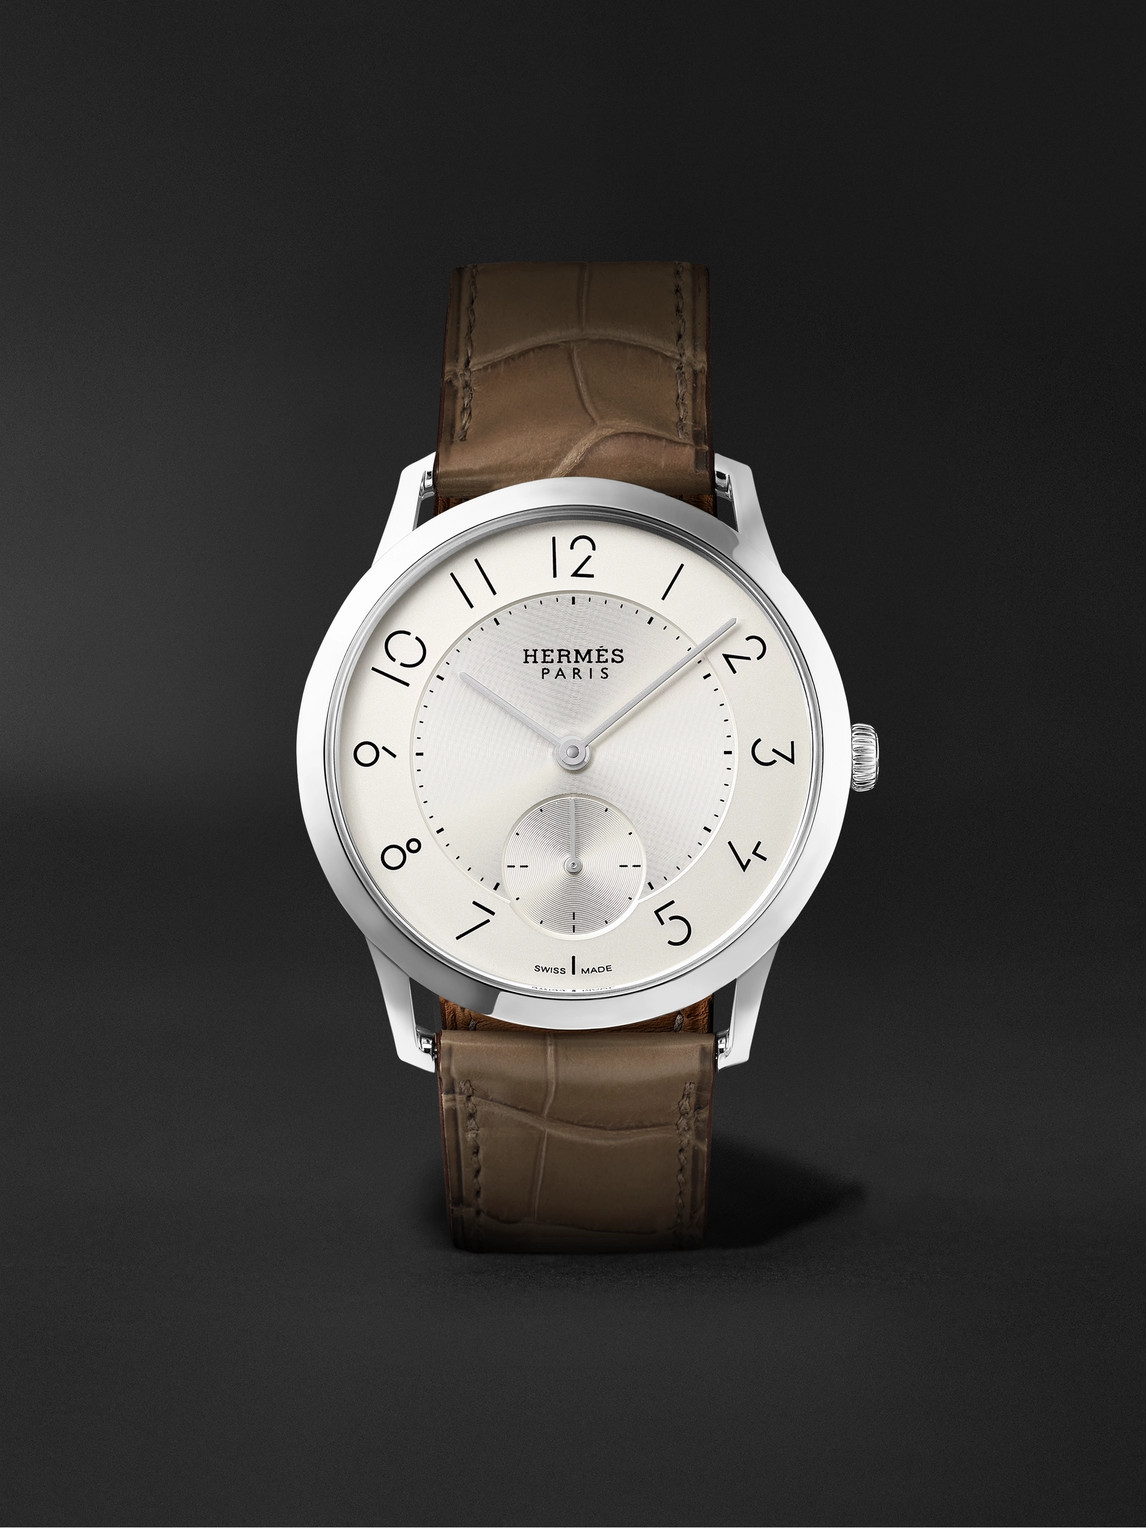 Hermès Timepieces Slim D'hermès Acier Automatic 39.5mm Stainless Steel And Alligator Watch, Ref. No. W045266ww00 In White